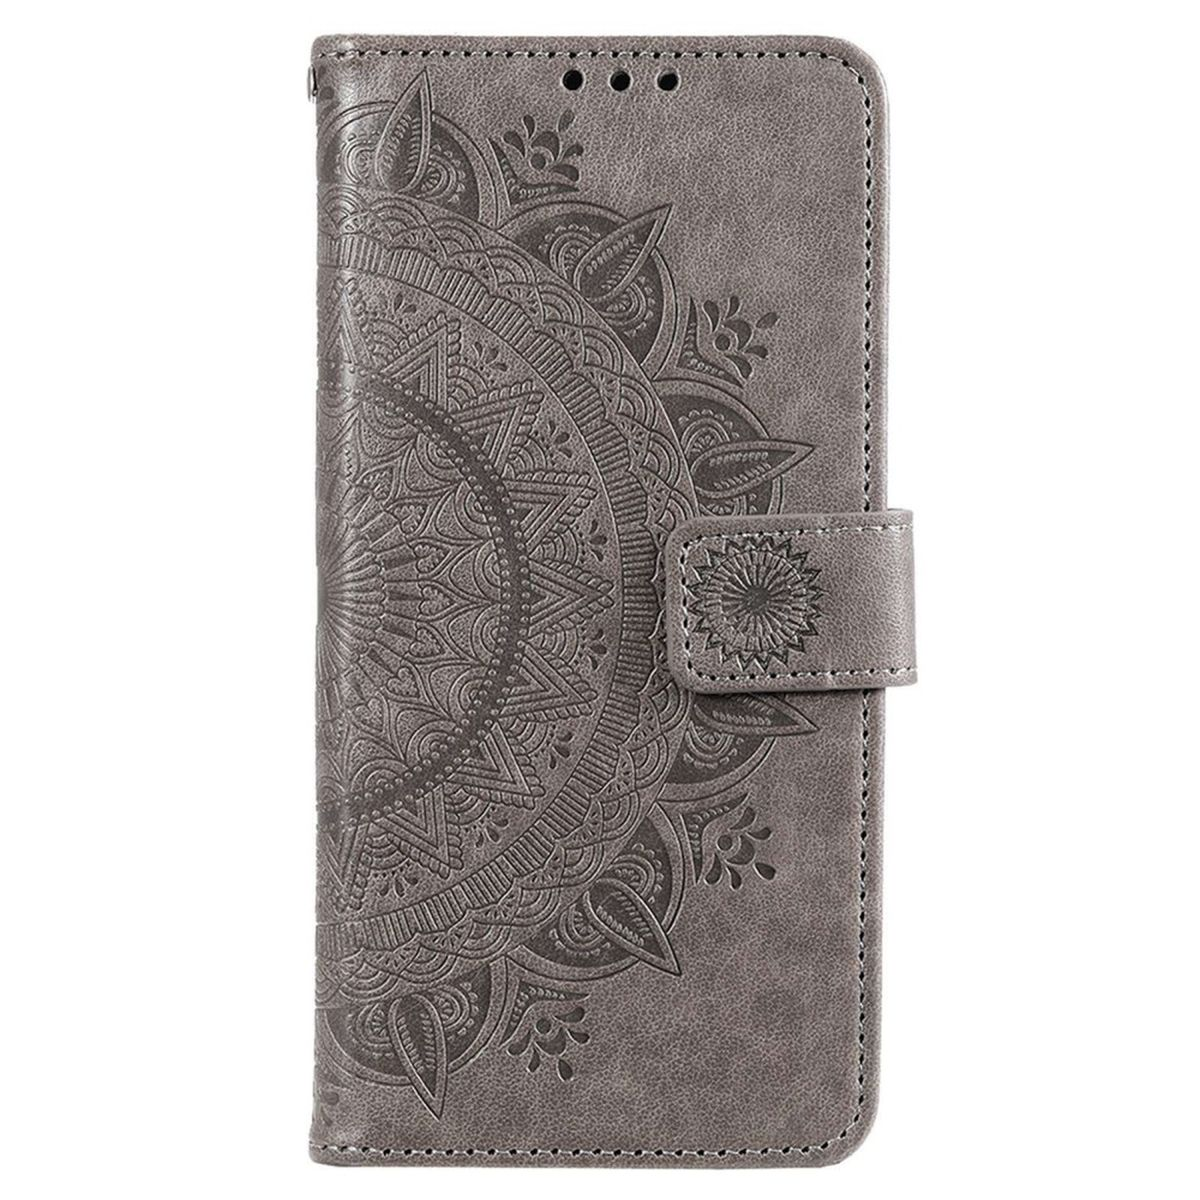 COVERKINGZ Klapphülle mit Mandala Muster, Grau 5G, M53 Bookcover, Samsung, Galaxy